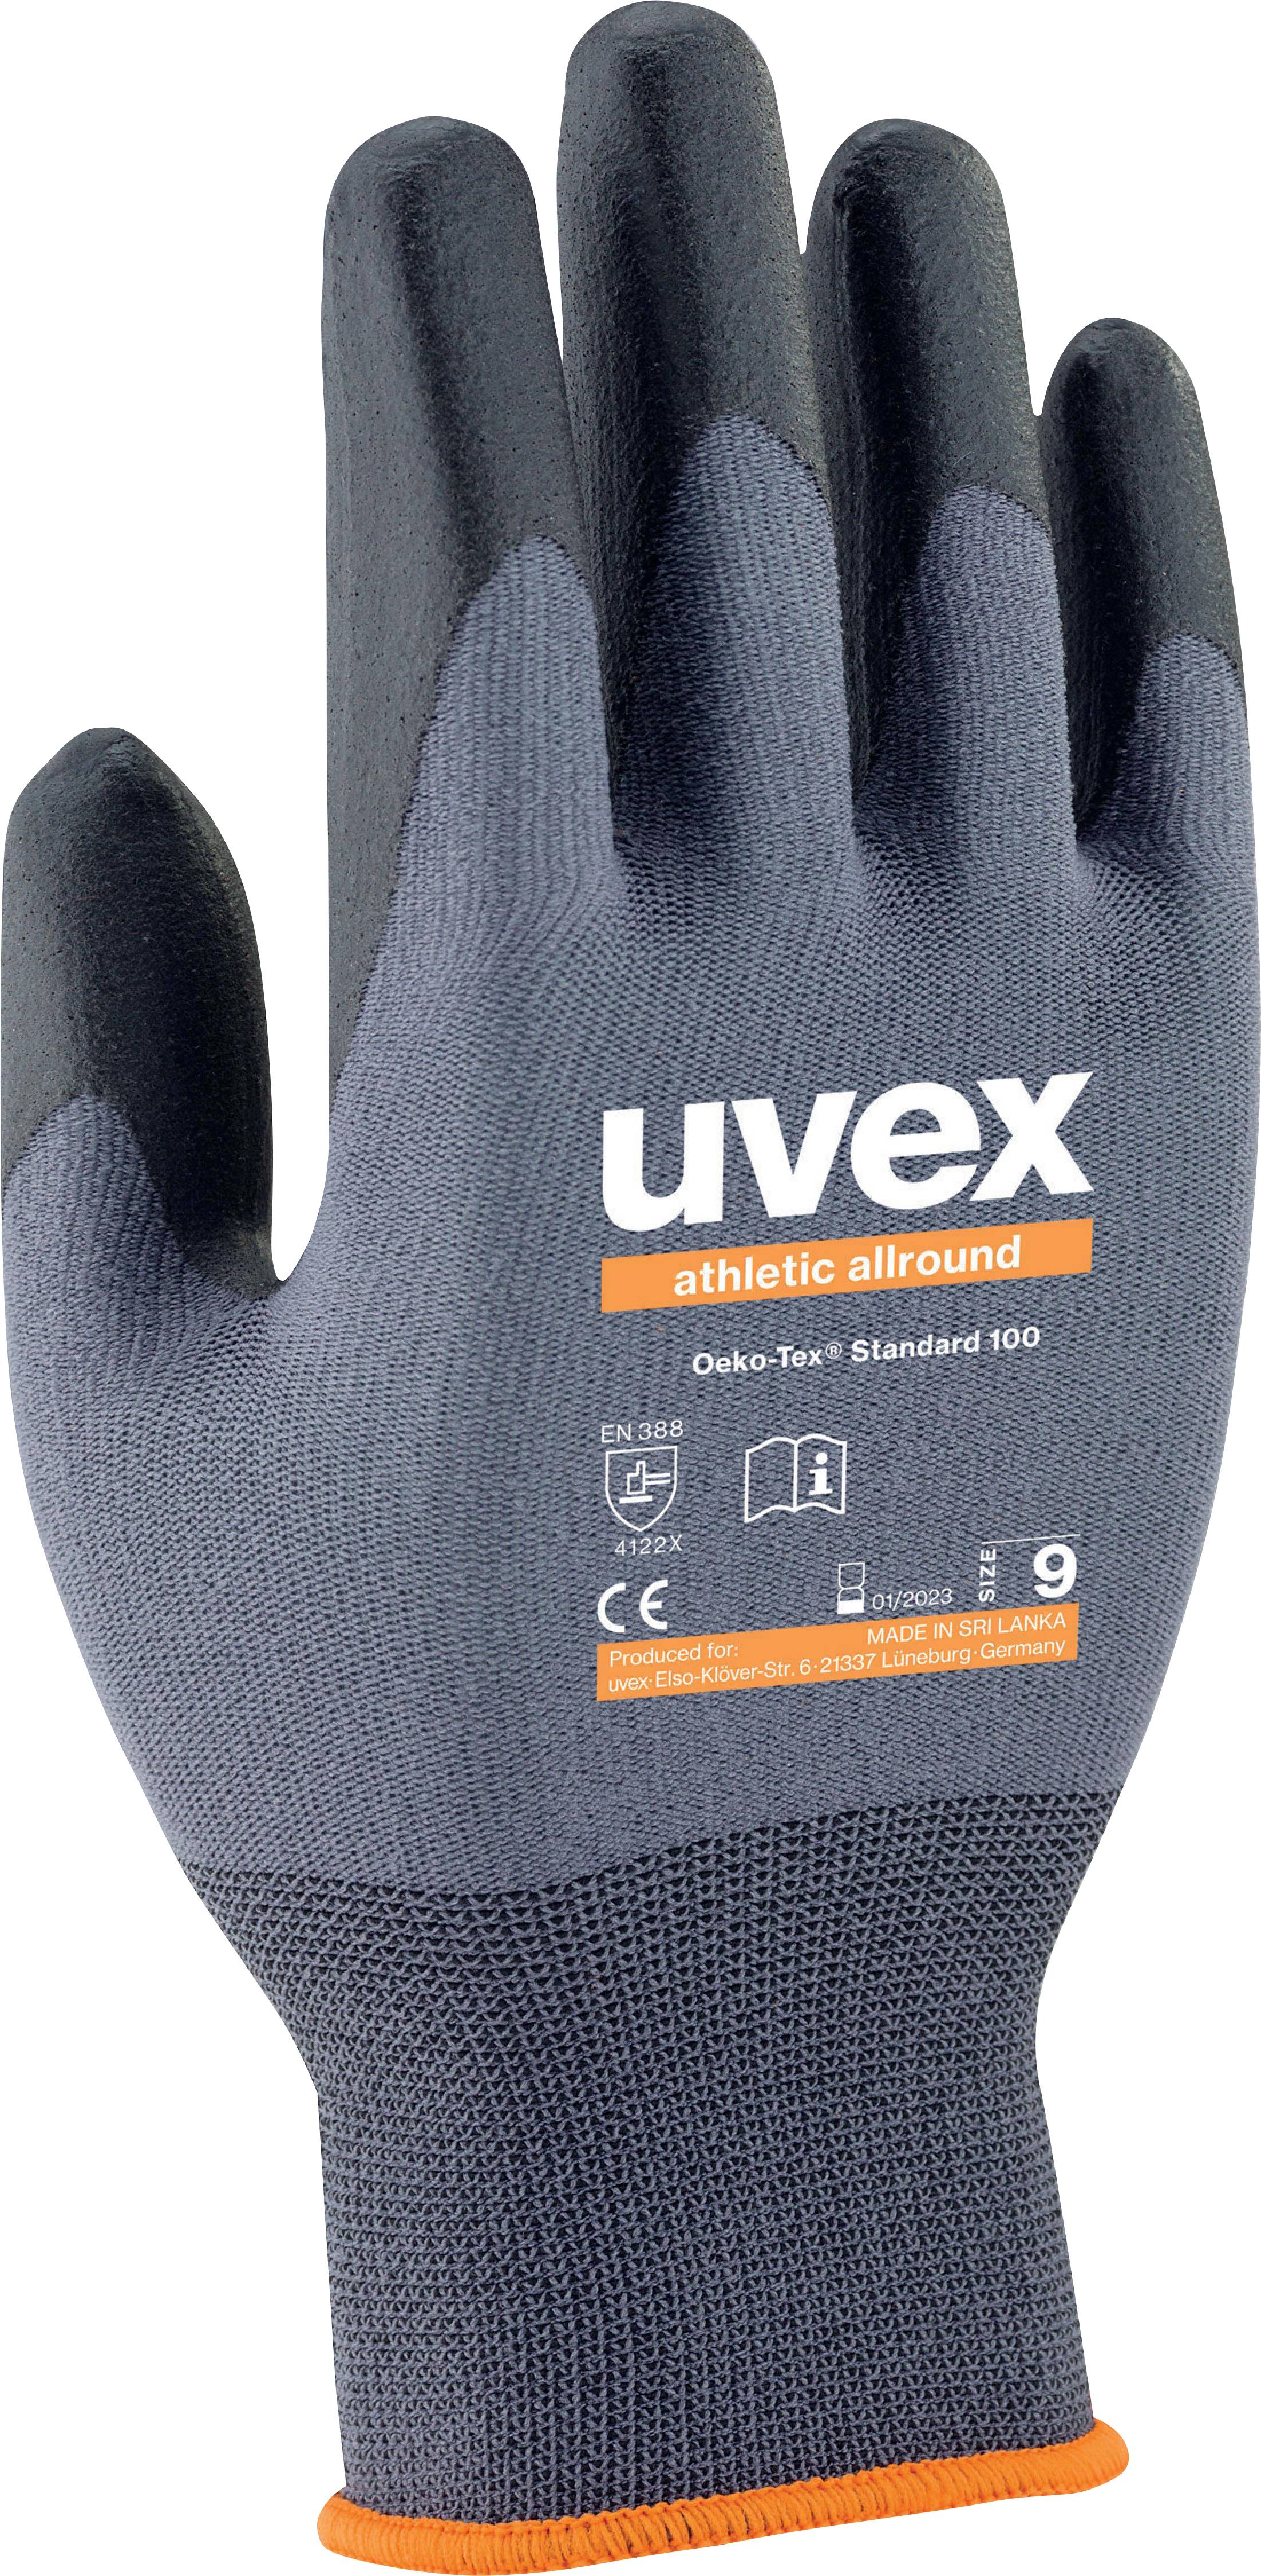 UVEX 60028 Fabrik-Handschuhe Anthrazit - Grau Elastan - Polyamid 1 Stück(e) (6002810)